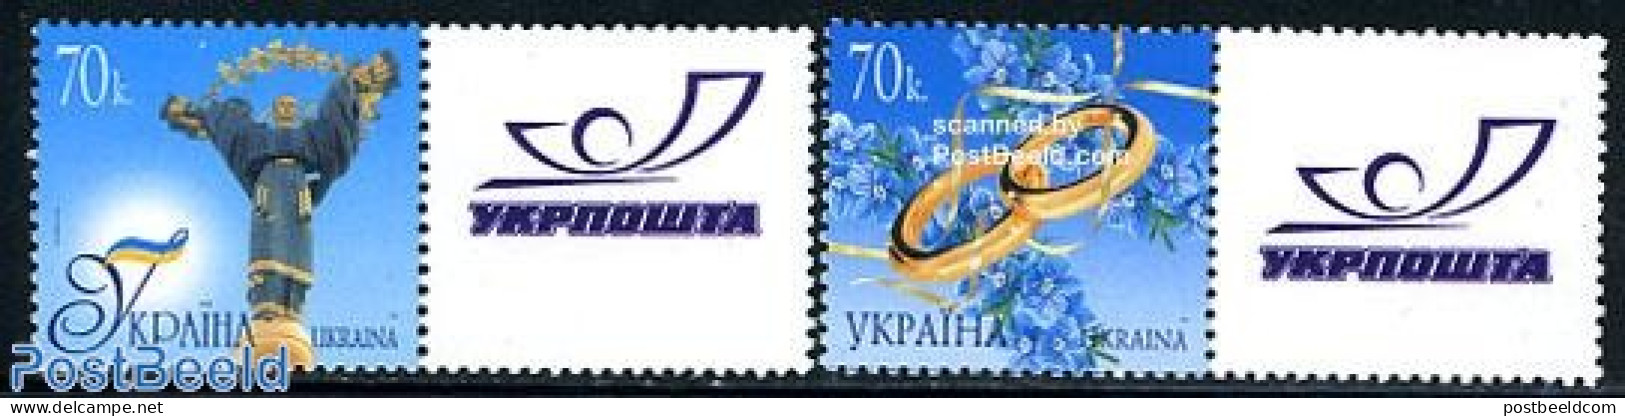 Ukraine 2007 Greeting Stamps With Personal Tabs 2v, Mint NH, Various - Greetings & Wishing Stamps - Oekraïne